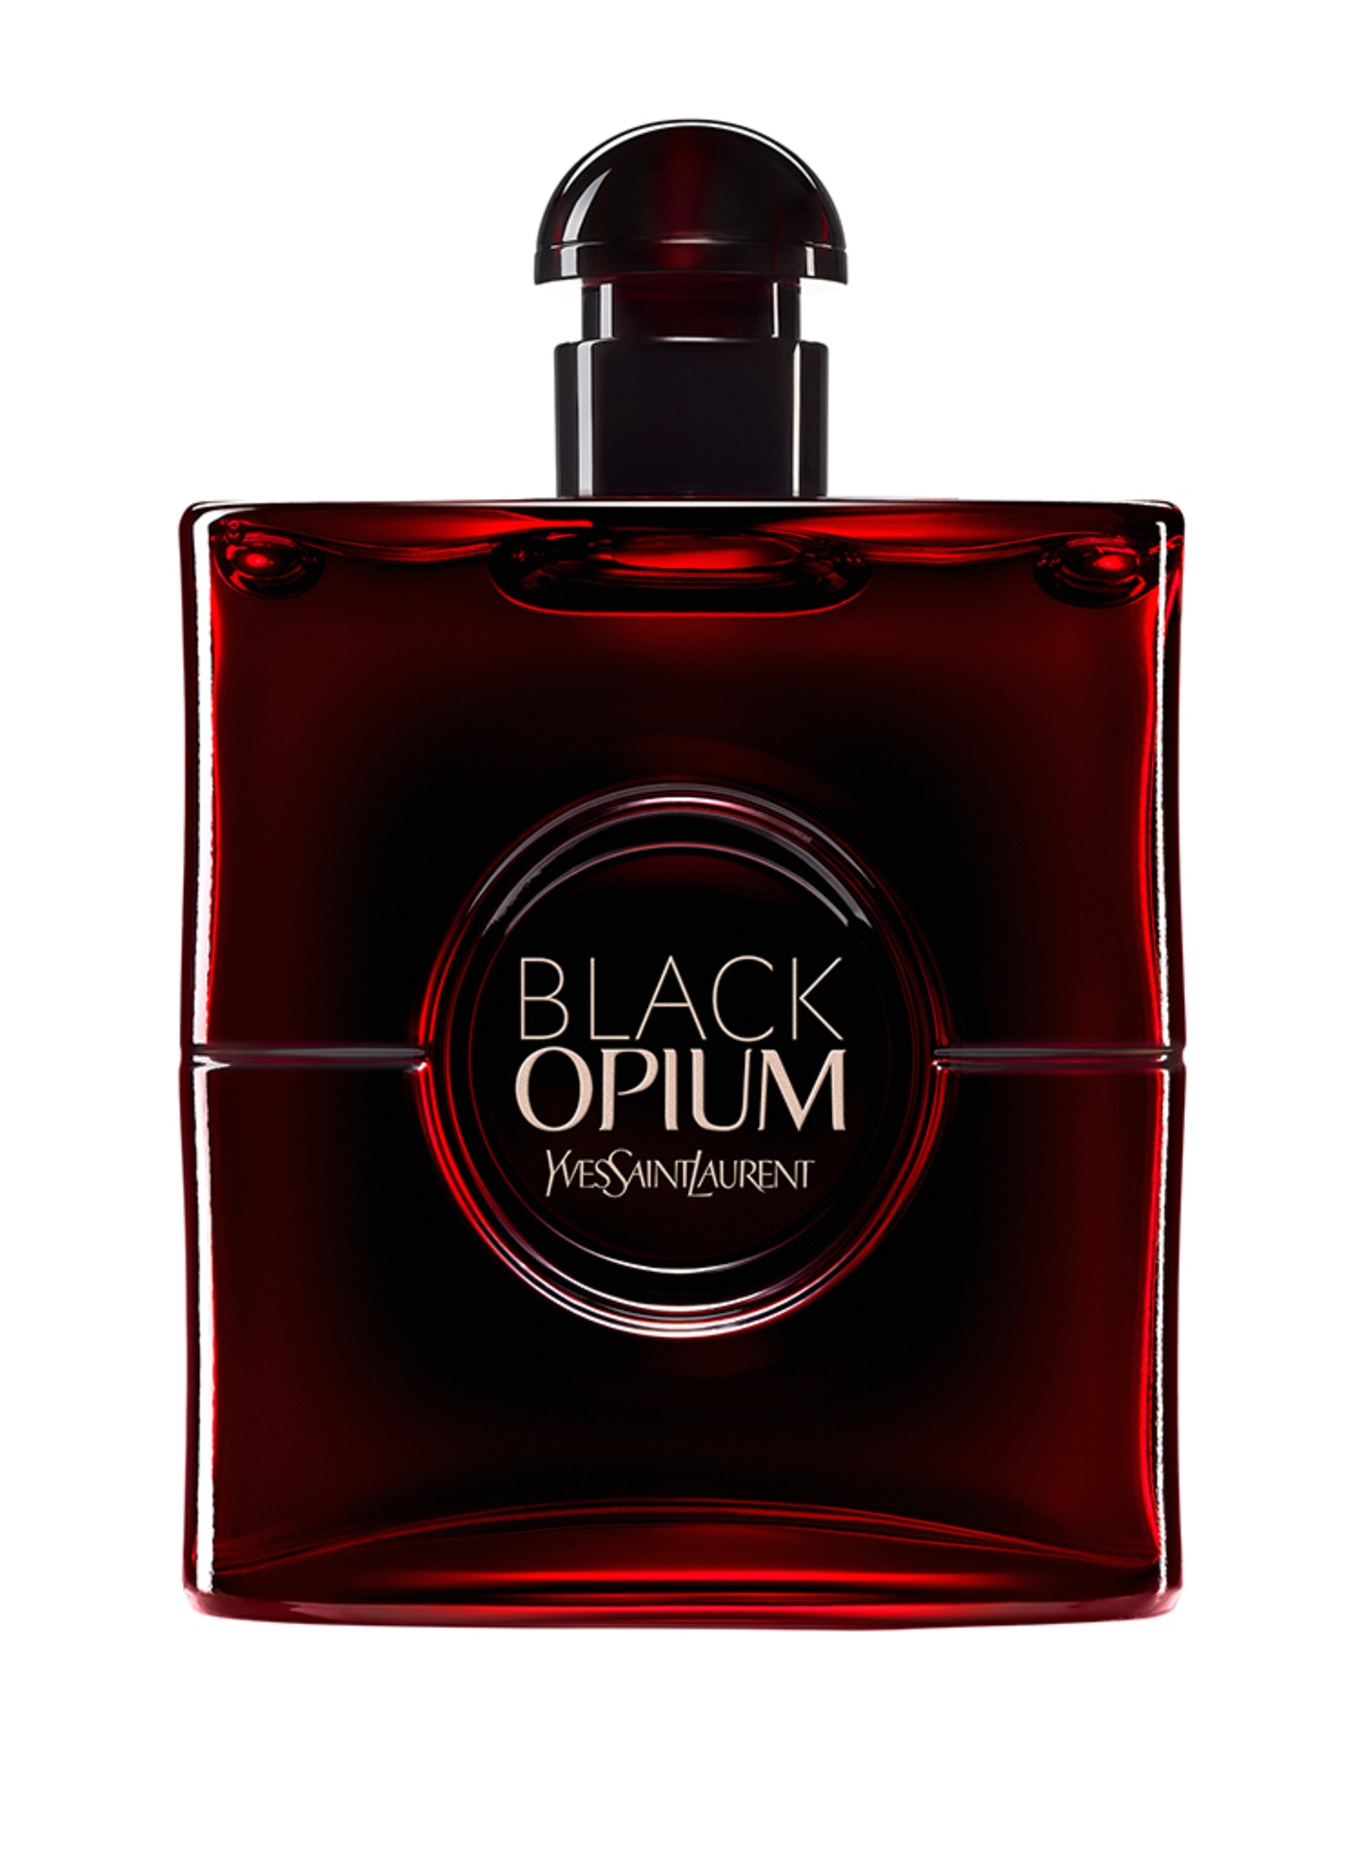 YVES SAINT LAURENT BEAUTÉ BLACK OPIUM OVER RED (Obrázek 1)